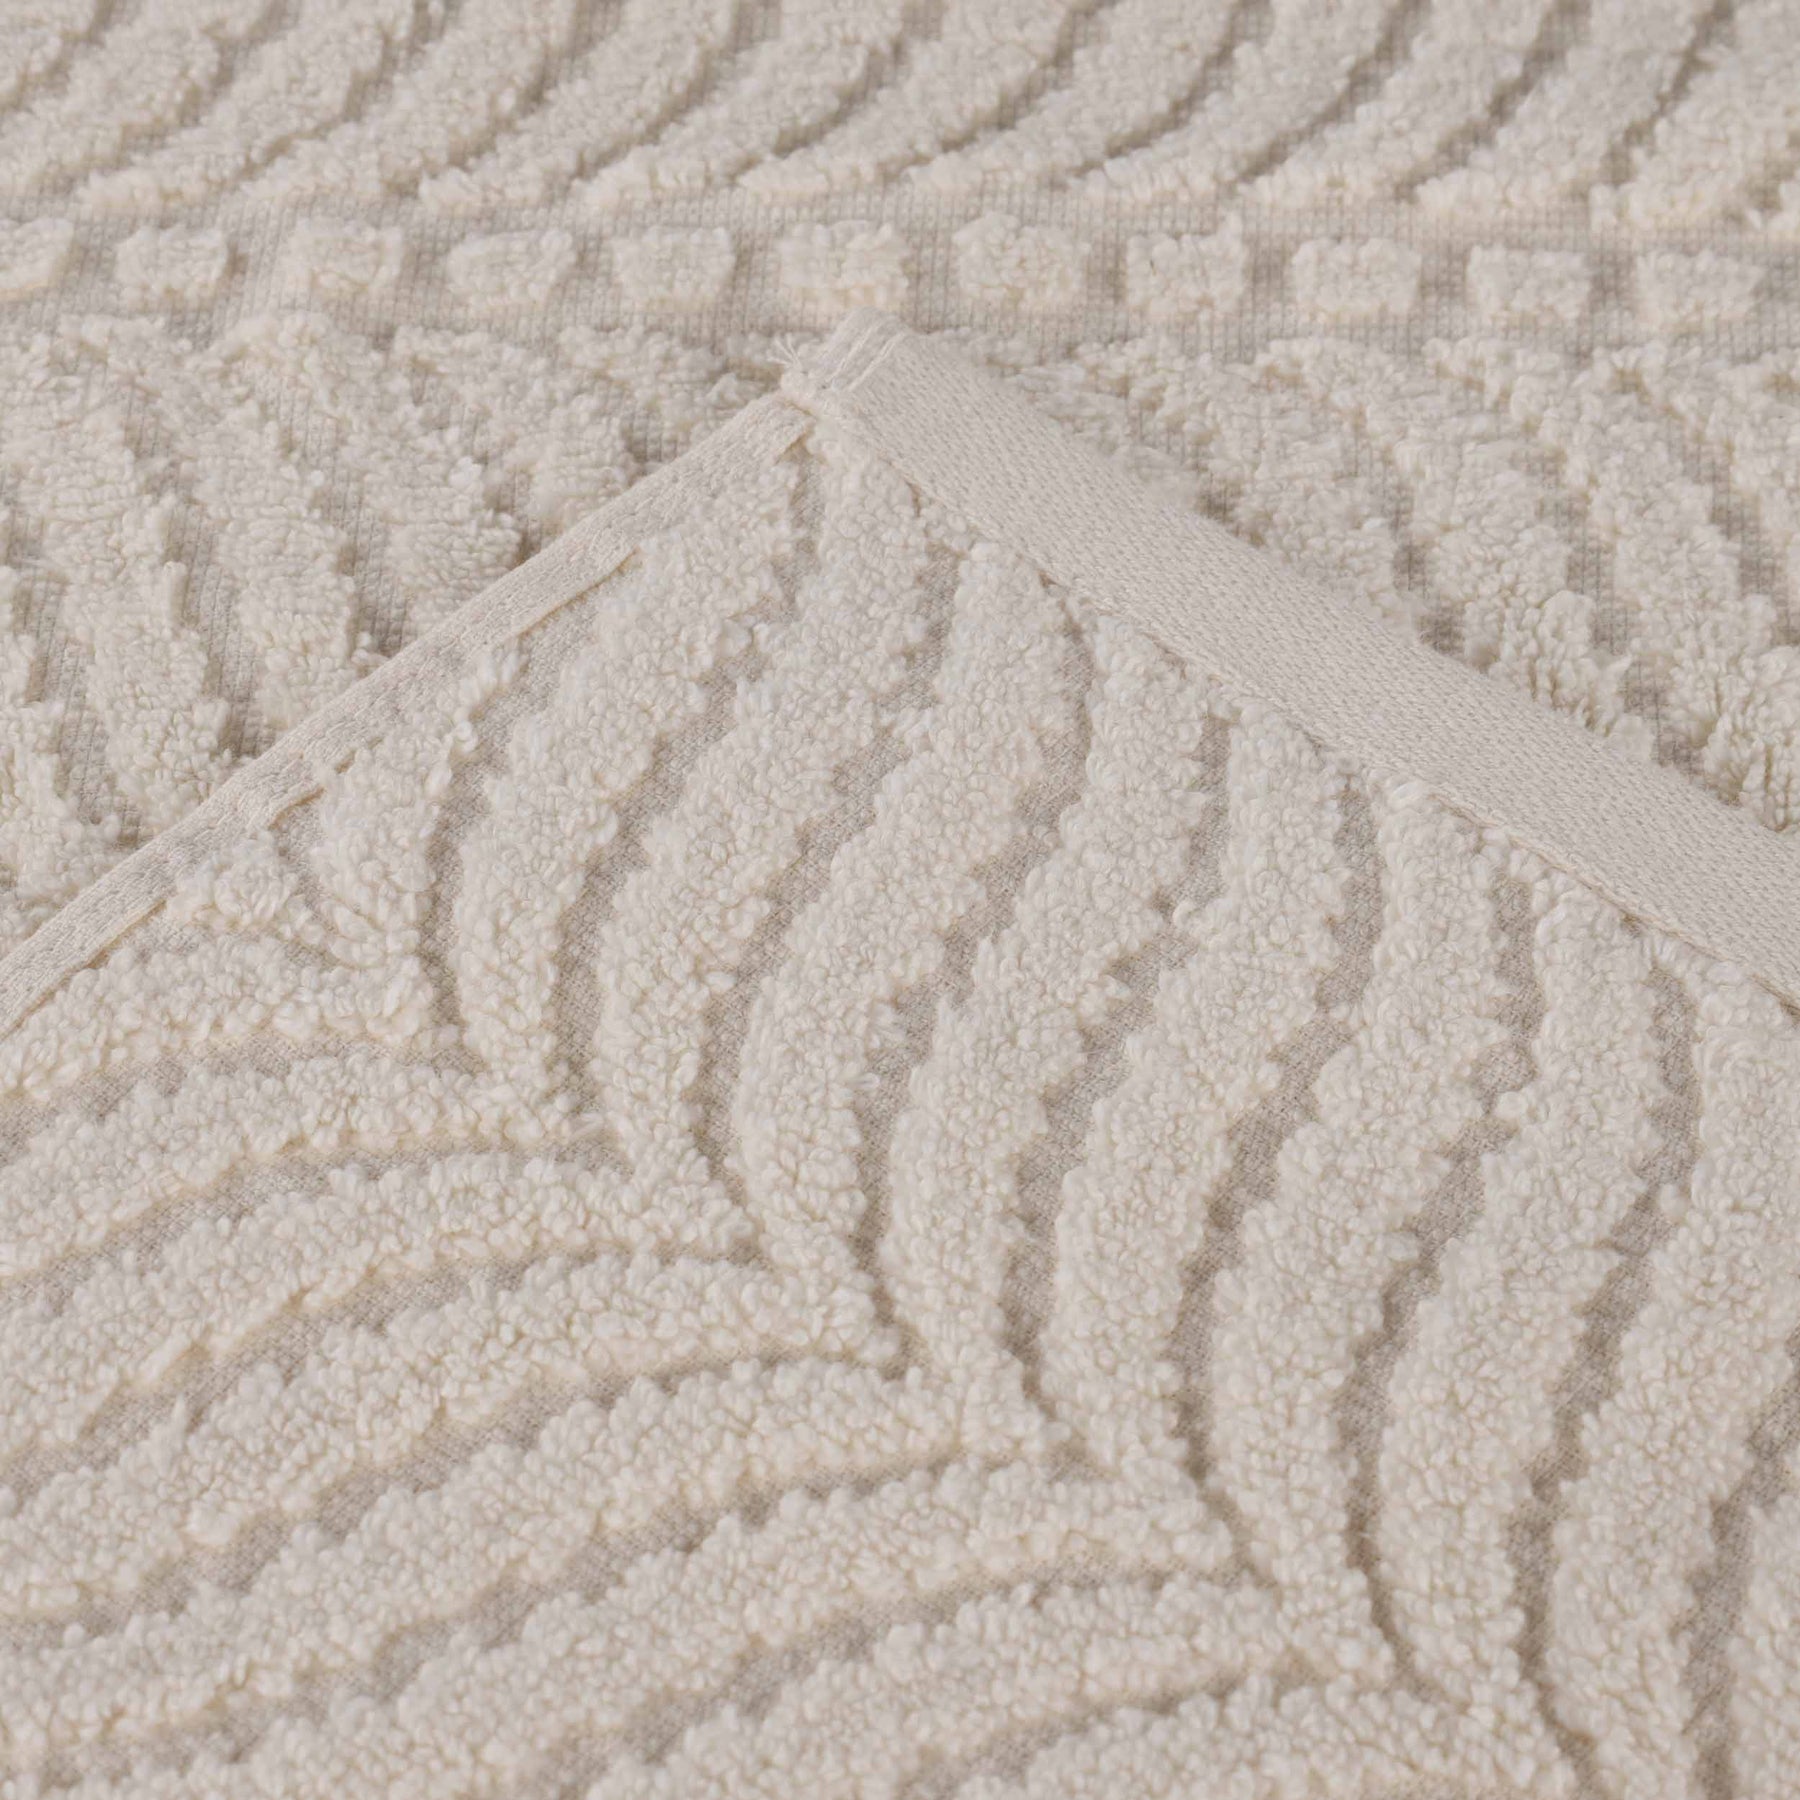 Chevron Zero Twist Cotton Solid and Jacquard Bath Sheet - Ivory